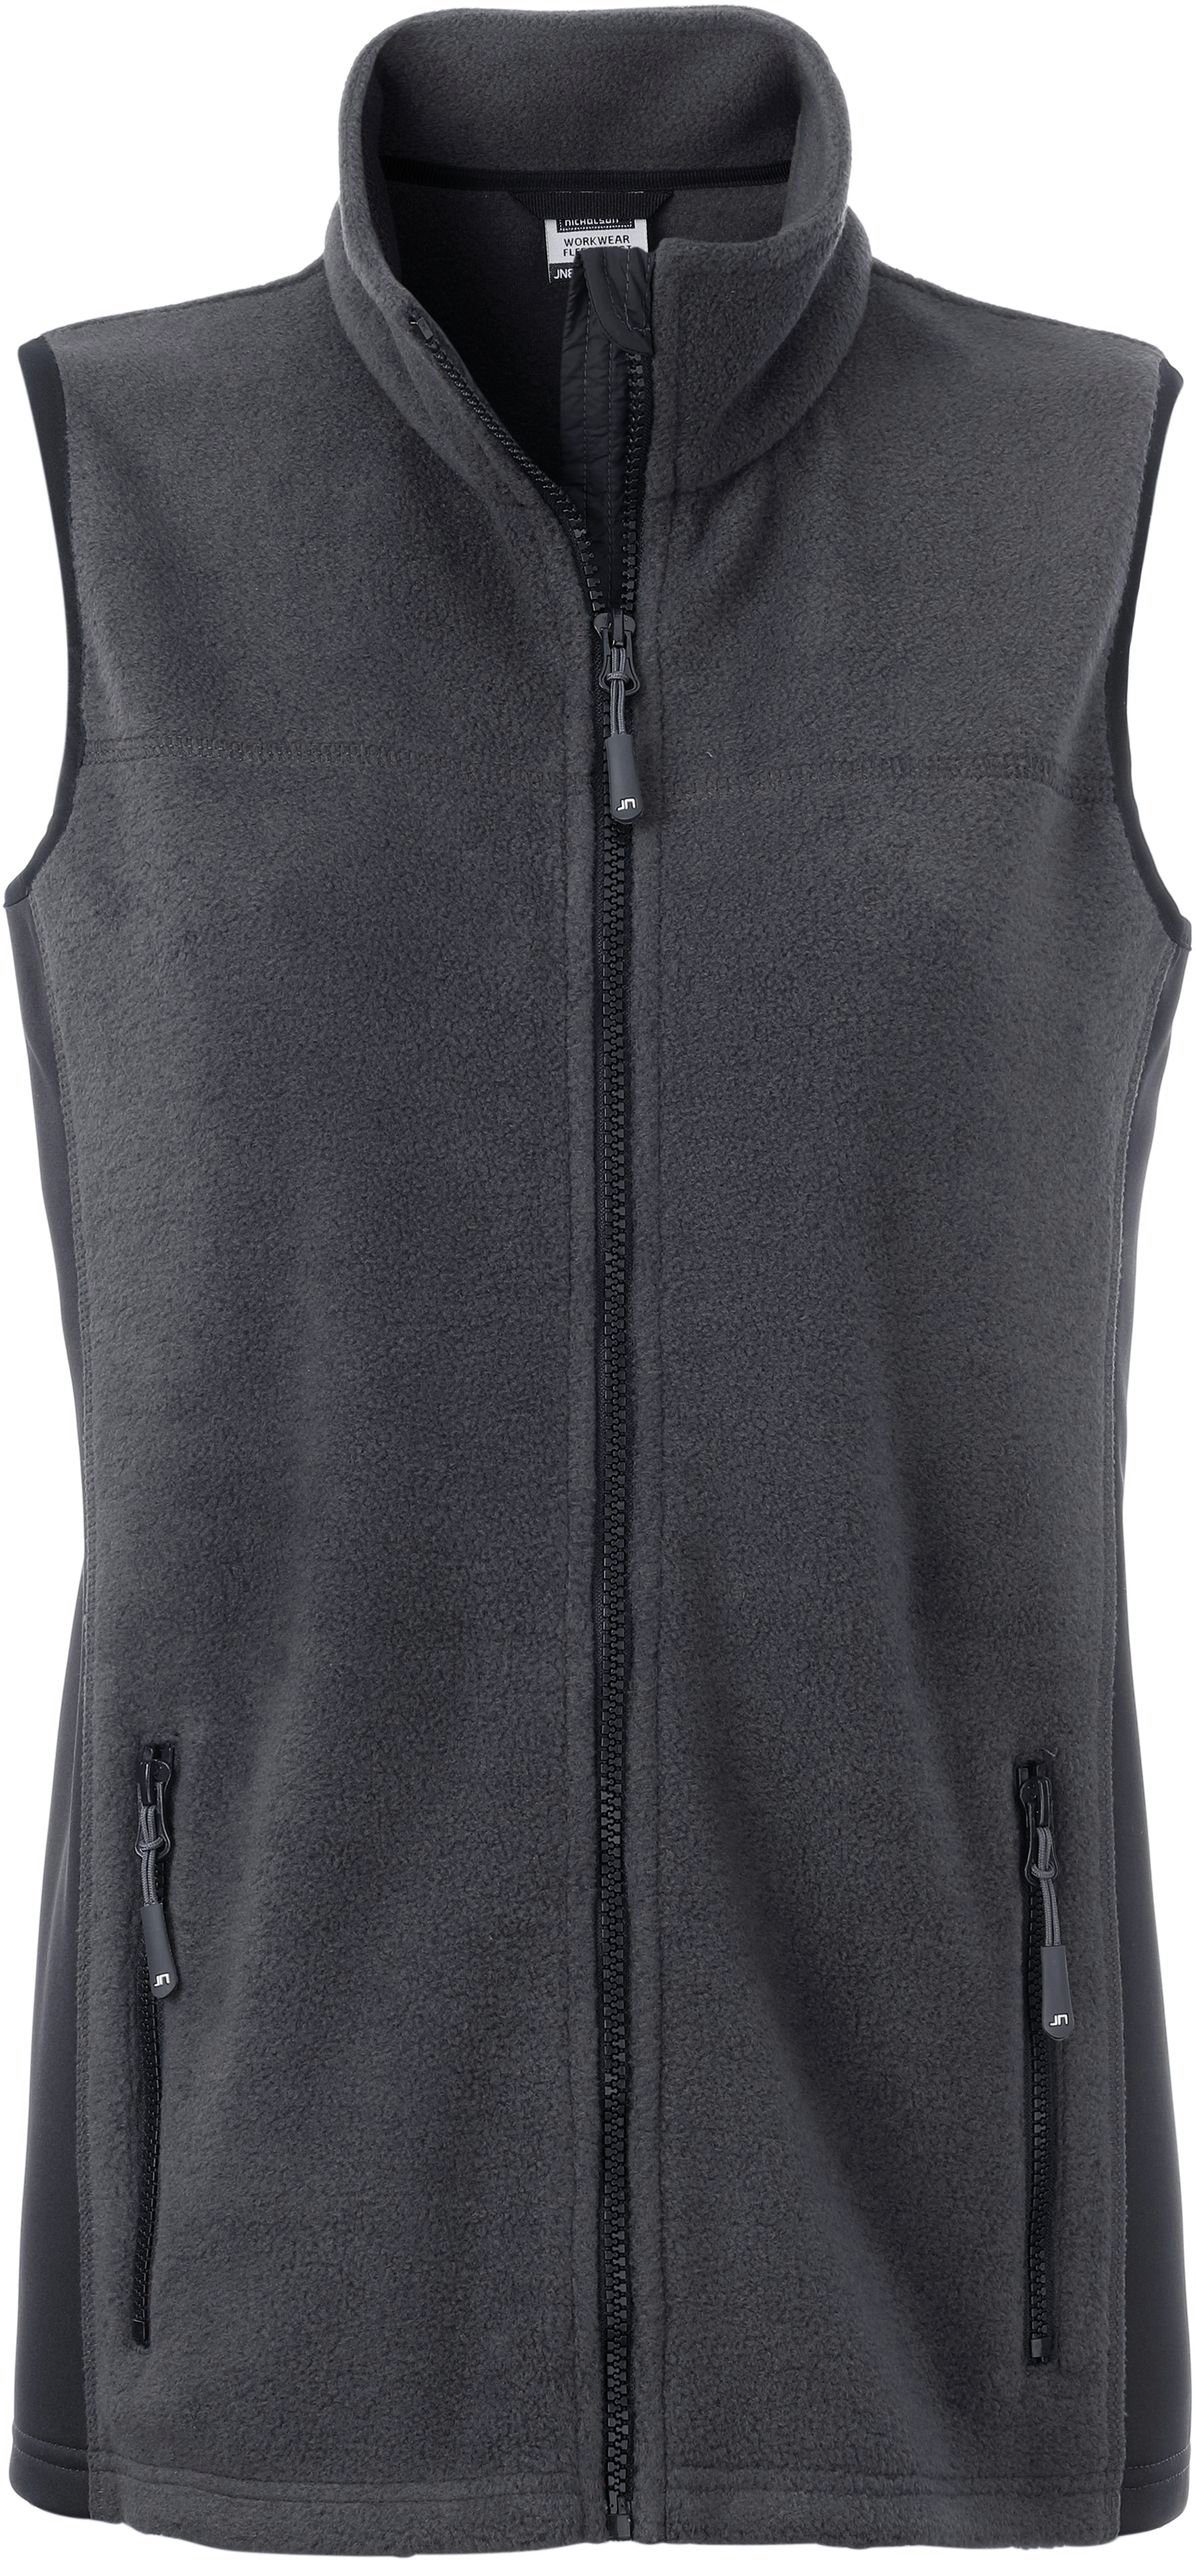 James & Nicholson Workwear carbon/black Fleeceweste FaS50855 Fleece Gilet Weste